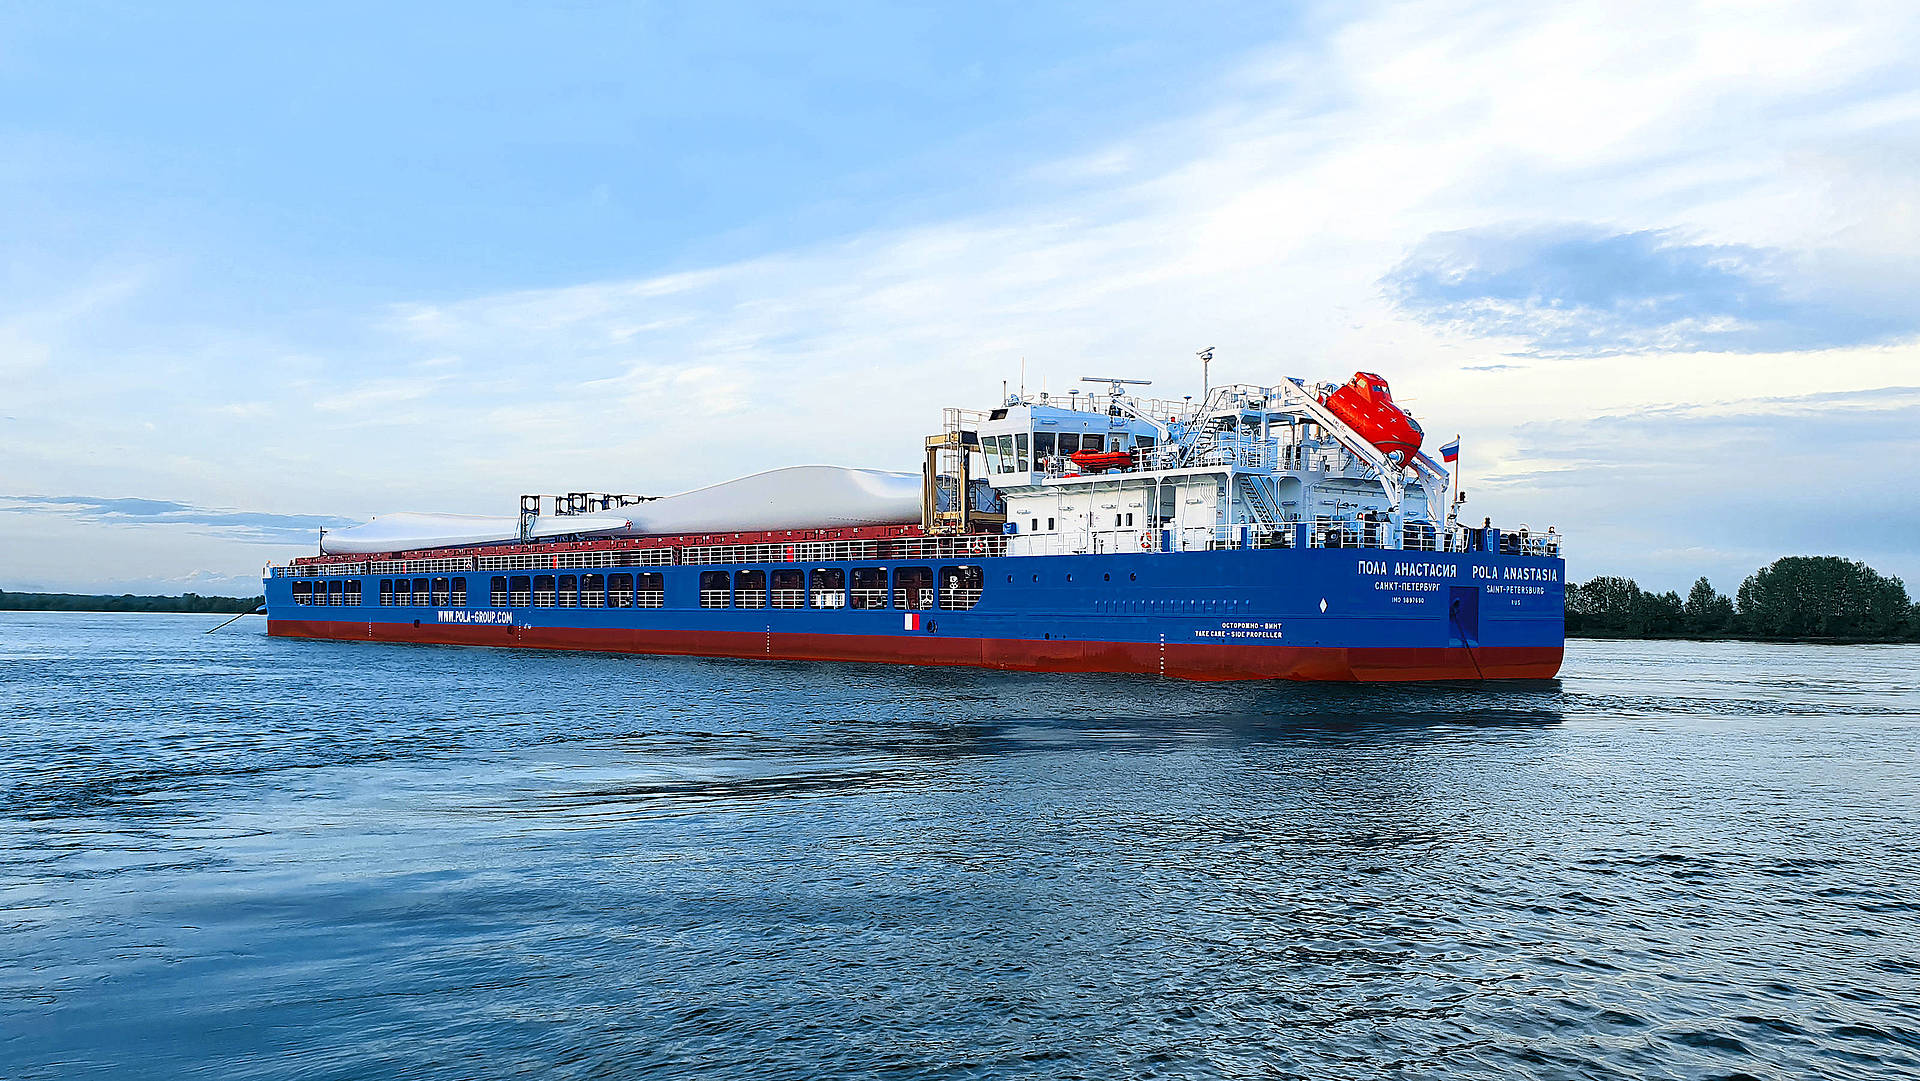 Pola Anastasia Dry Cargo Vessel